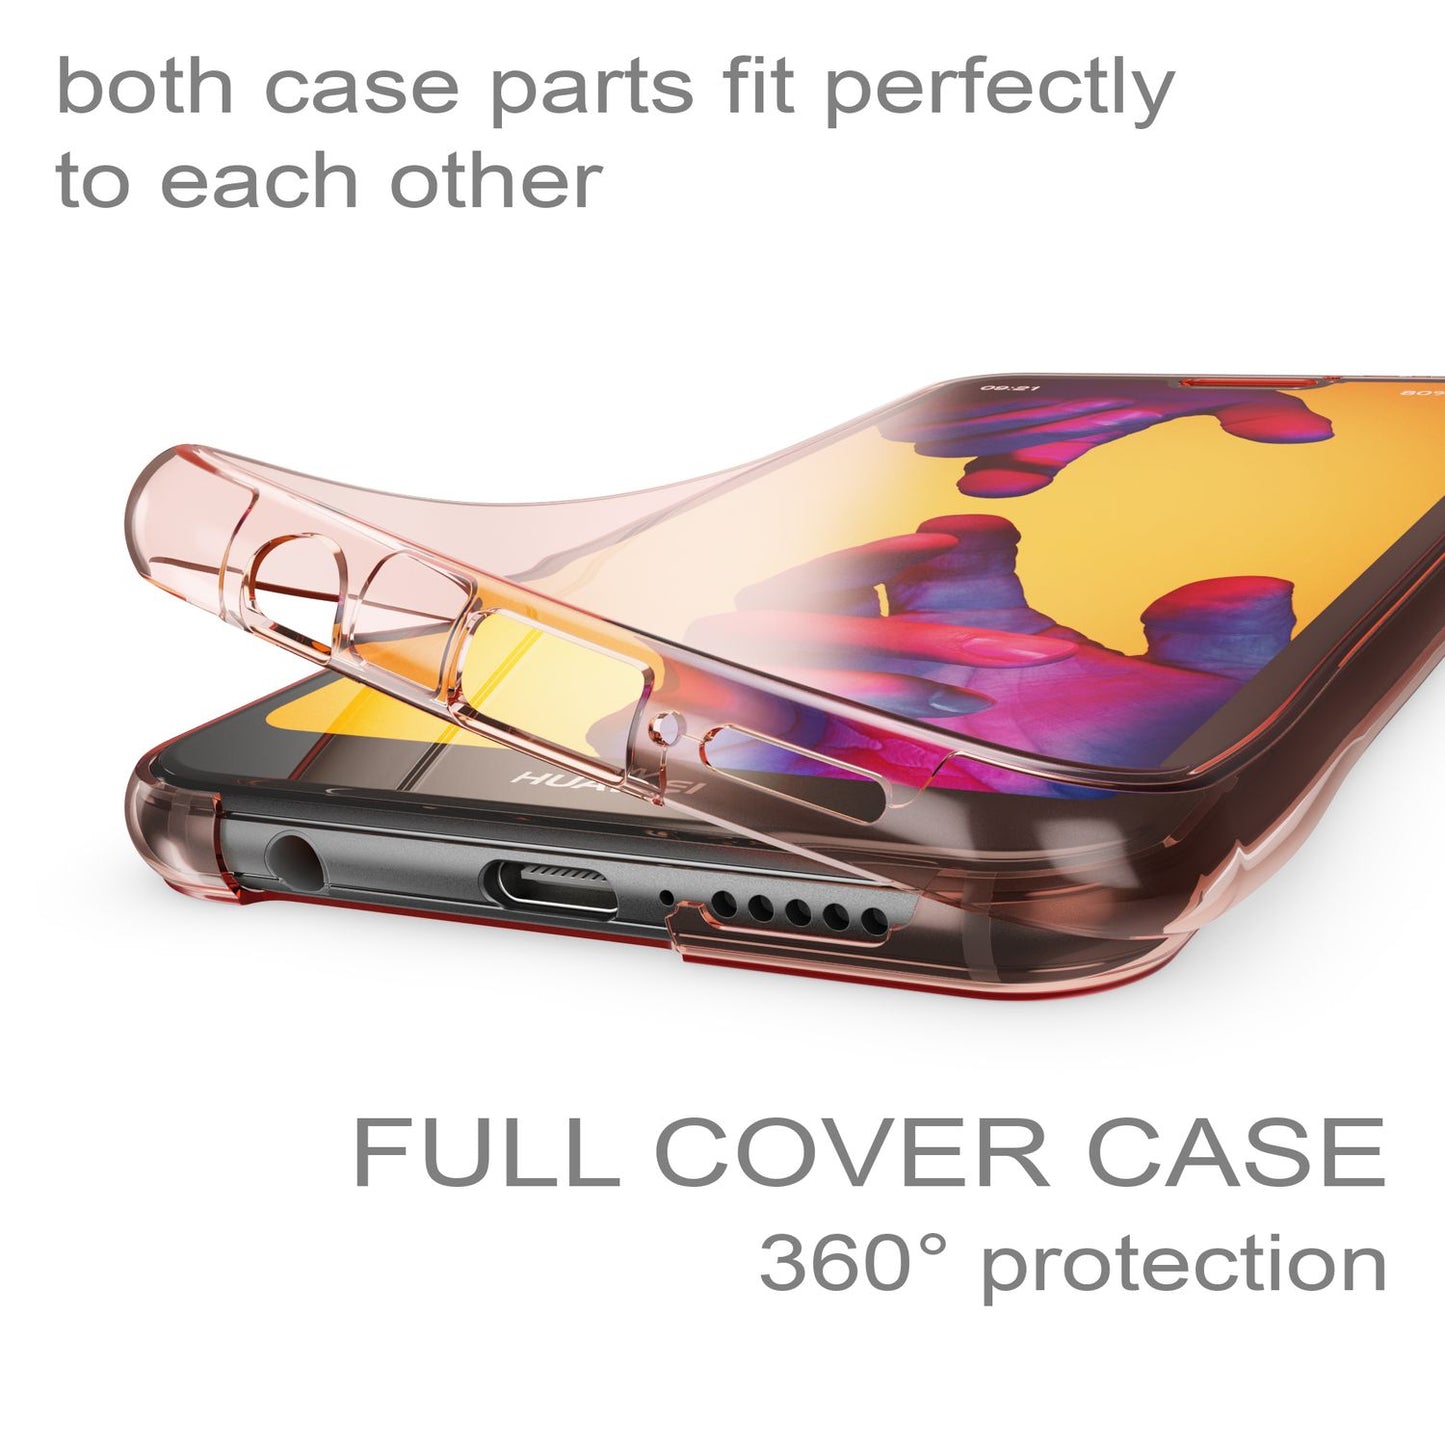 NALIA Glitzer Hülle 360 Grad für Huawei P20 Lite, Silikon Handyhülle Full Cover